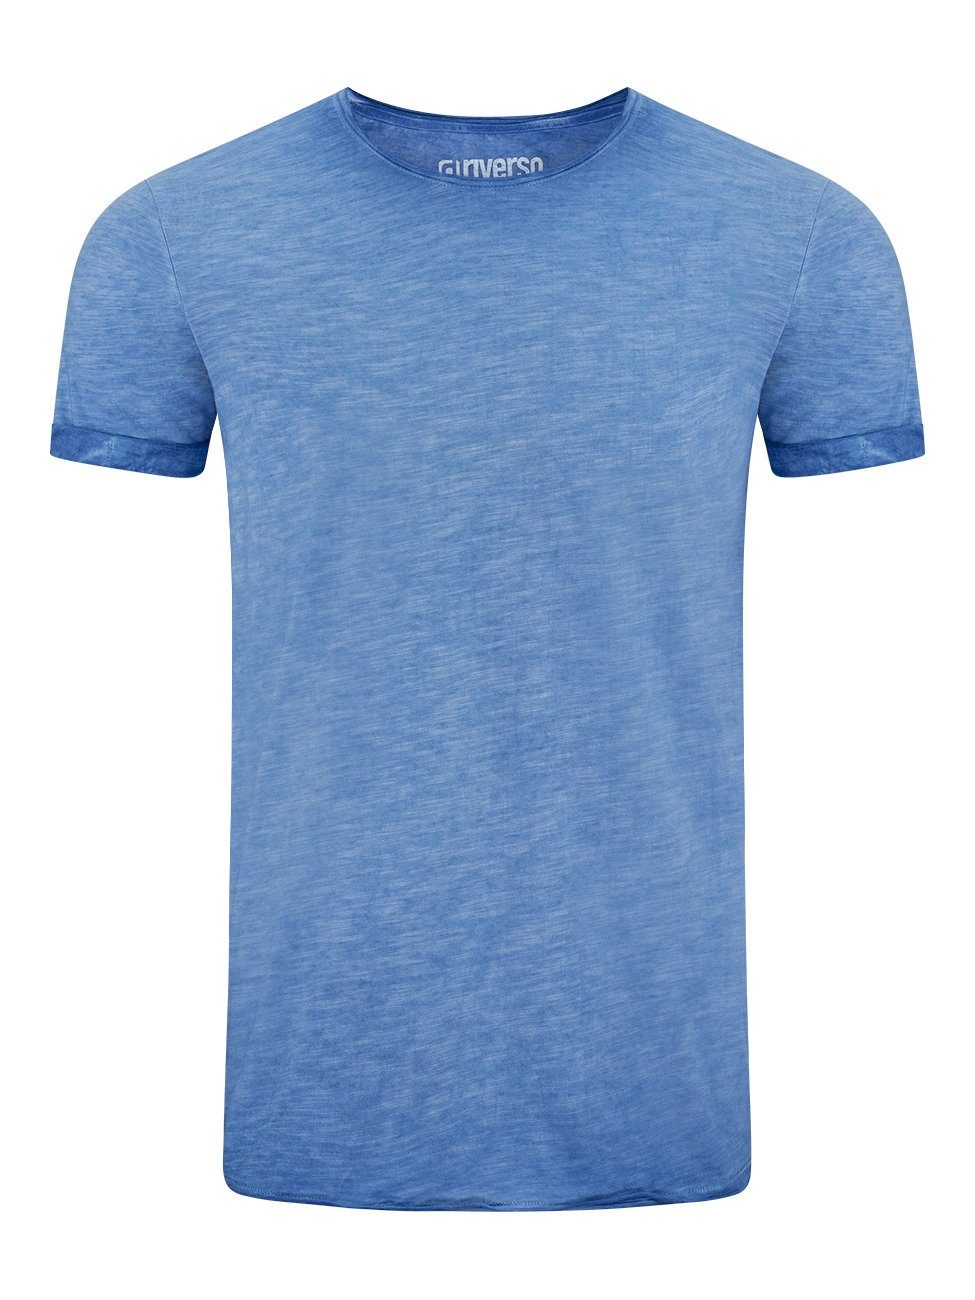 2 Basic Tee T-Shirt Baumwolle aus riverso Herren Fit Rundhalsausschnitt Pack 100% Shirt RIVMatteo Shirt Kurzarm Regular (4-tlg) mit